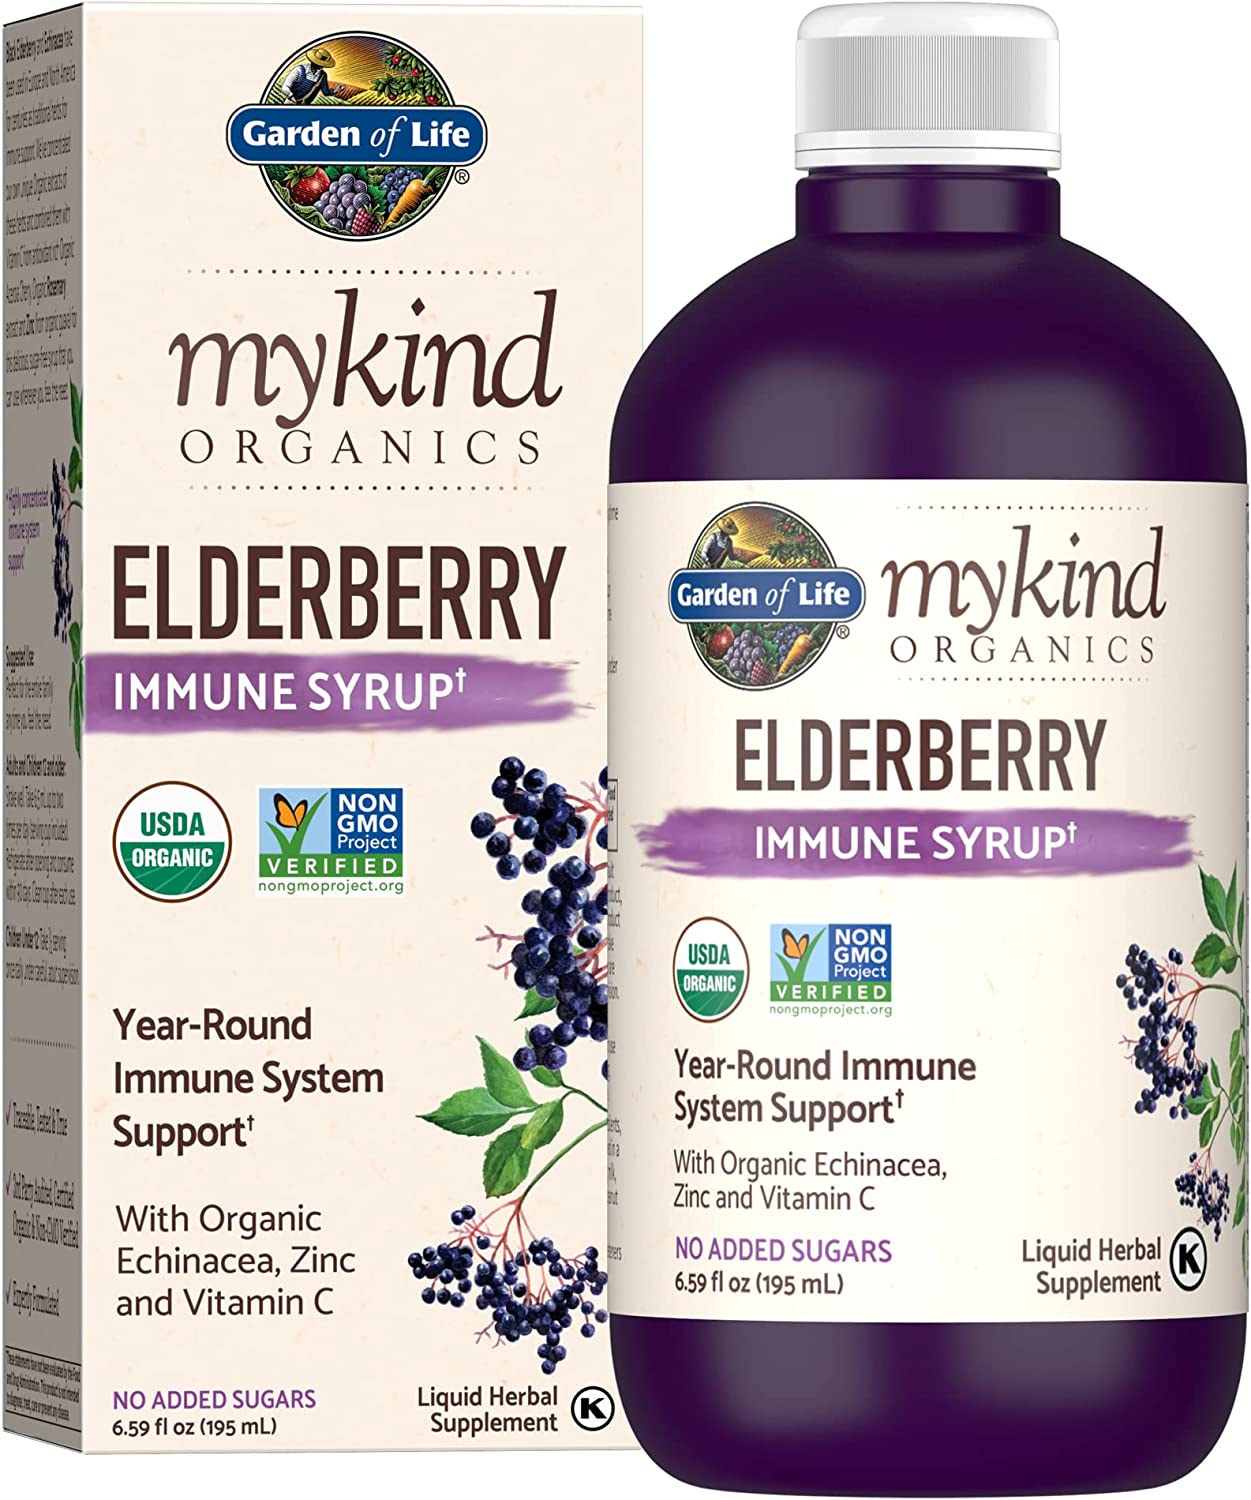 Garden of Life Mykind Organics Plant Based Elderberry Immune Syrup 6.59 fl oz (195 Ml) for Kids & Adults: Sambucus, Echinacea, Zinc & Vitamin C, 0g Sugar, Organic Vegan Gluten Free Herbal Supplement